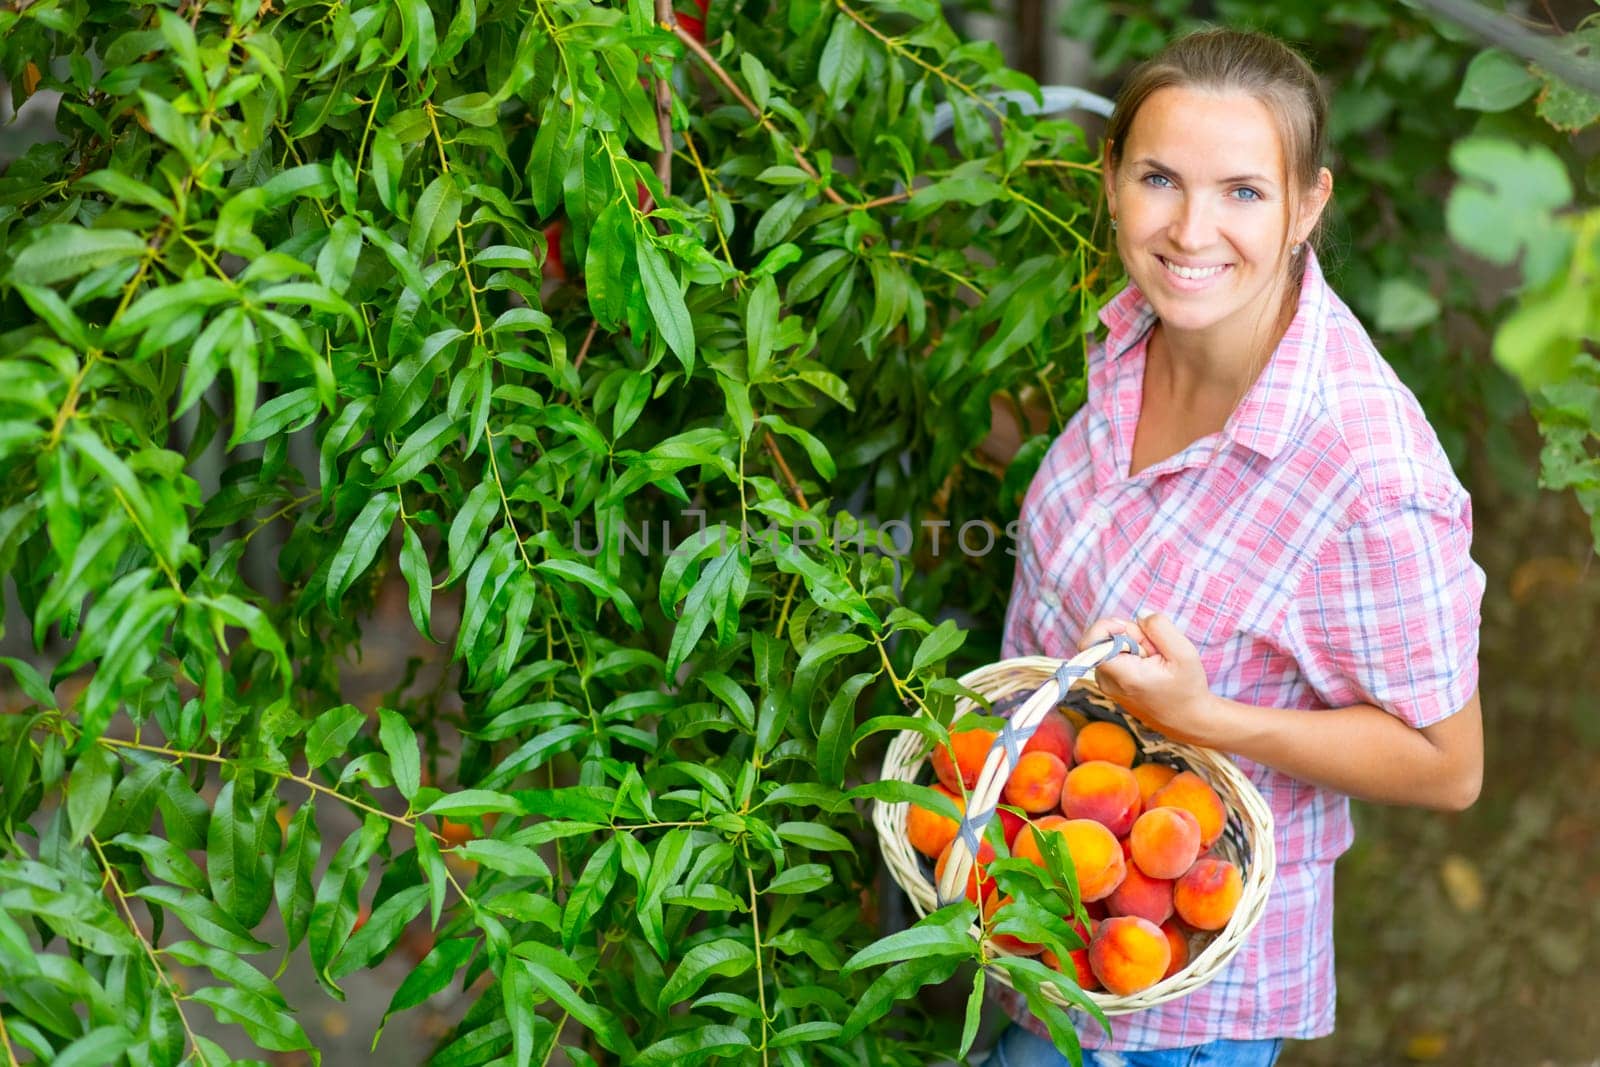 Harvesting peaches. Woman farmer picks ripe peaches ripe peaches from tree into basket in the garden.